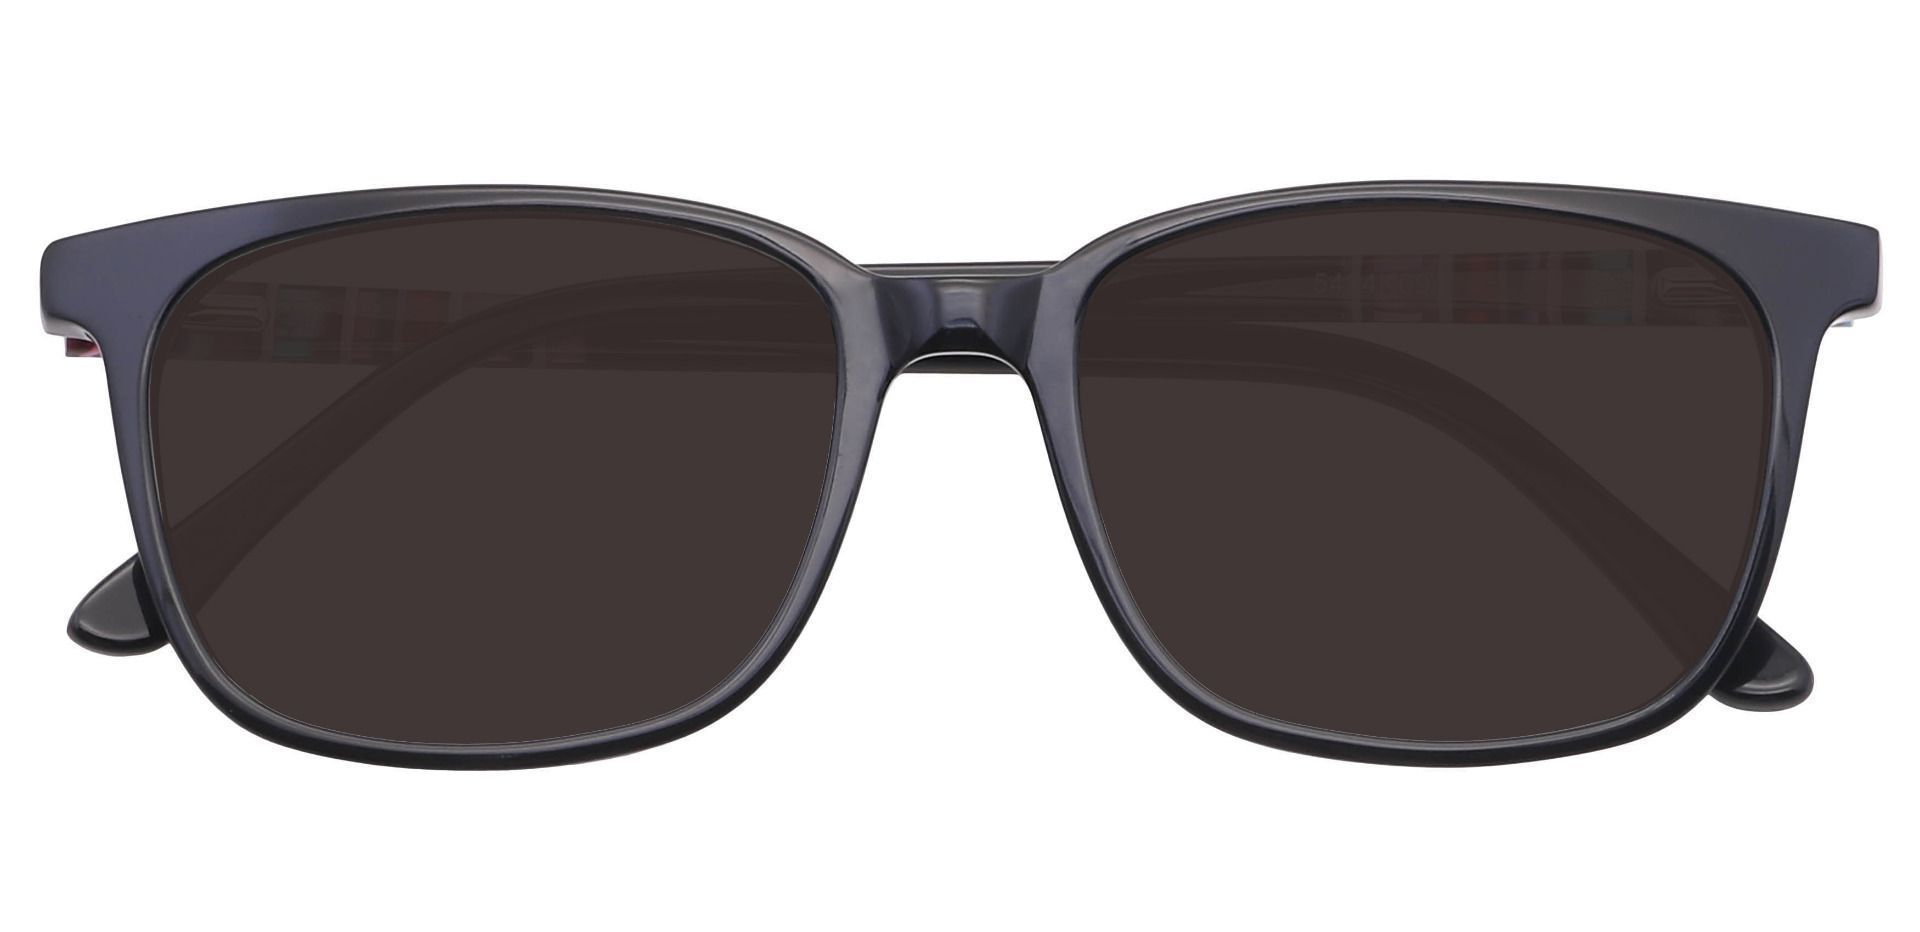 Fern Square Prescription Sunglasses - Black Frame With Gray Lenses